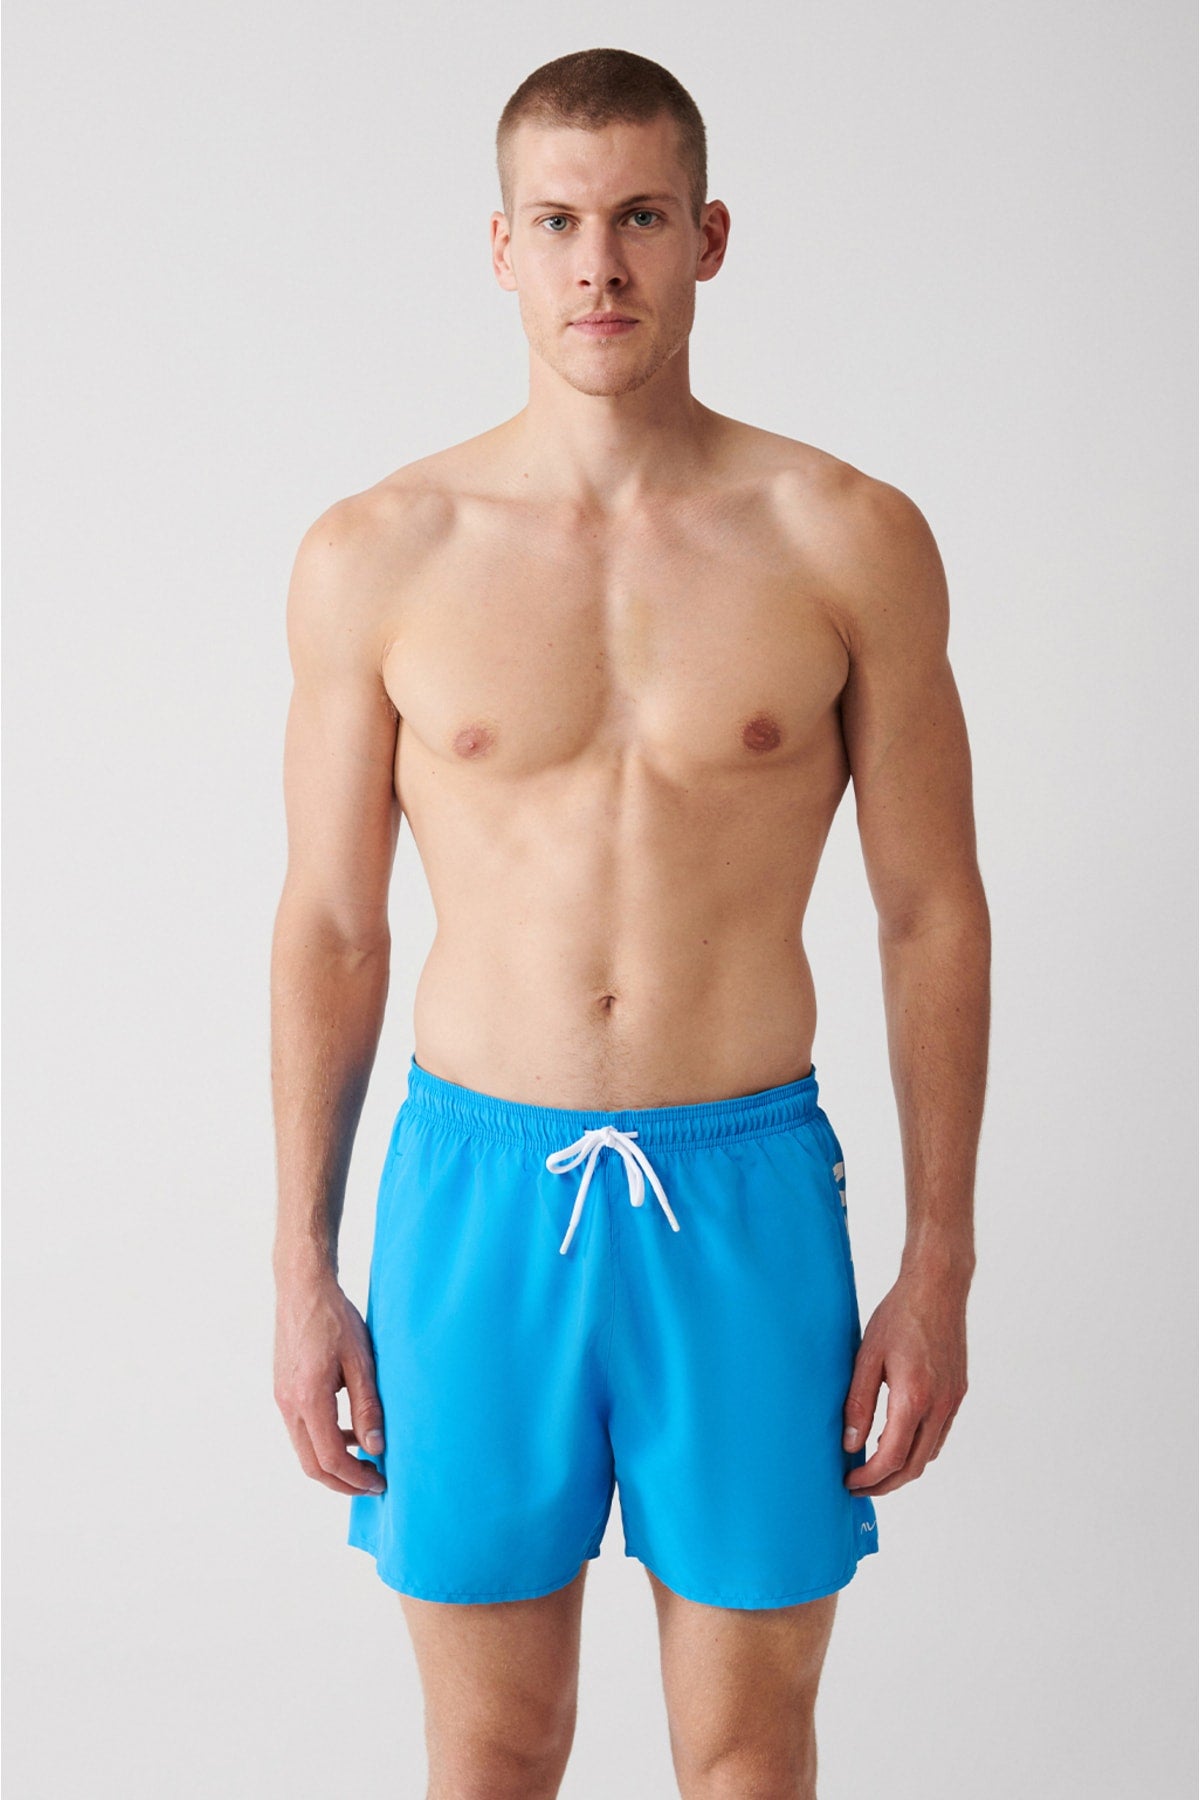 Men's White-turquoise Quick Dry Printed Standard Size Swimwear Marine Shorts E003802